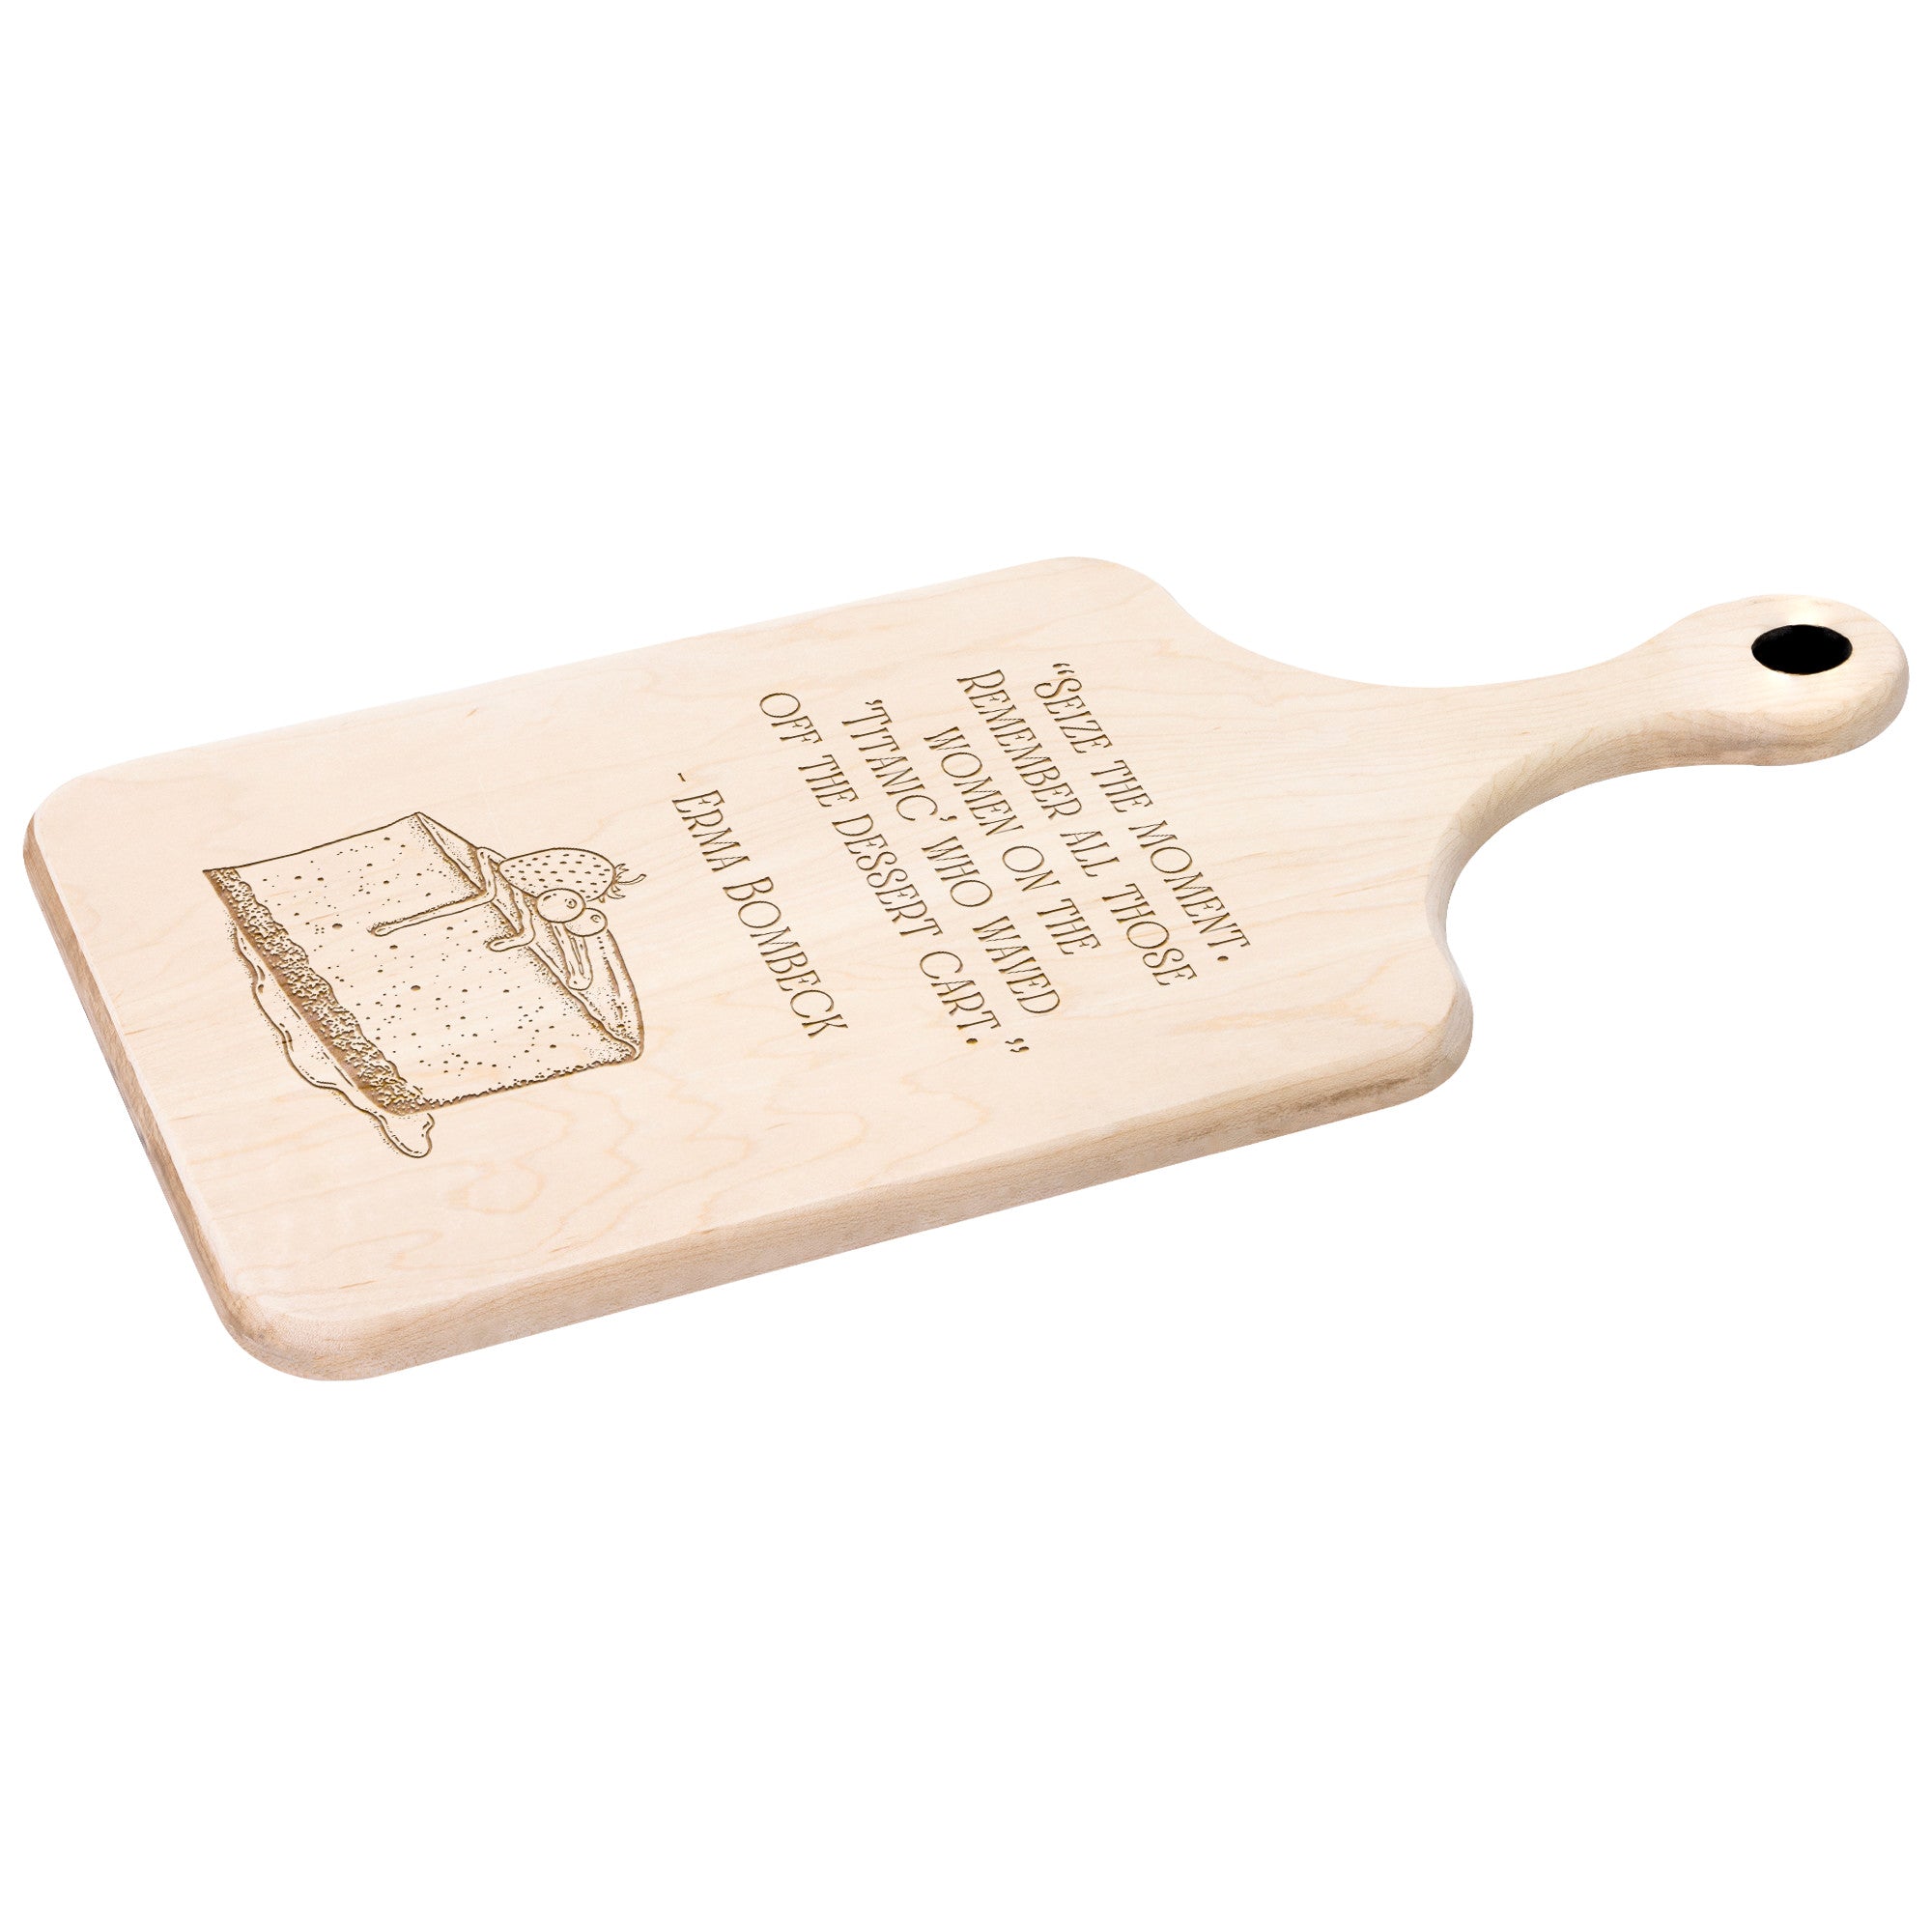 Hardwood Paddle Cutting Board - Variant 06